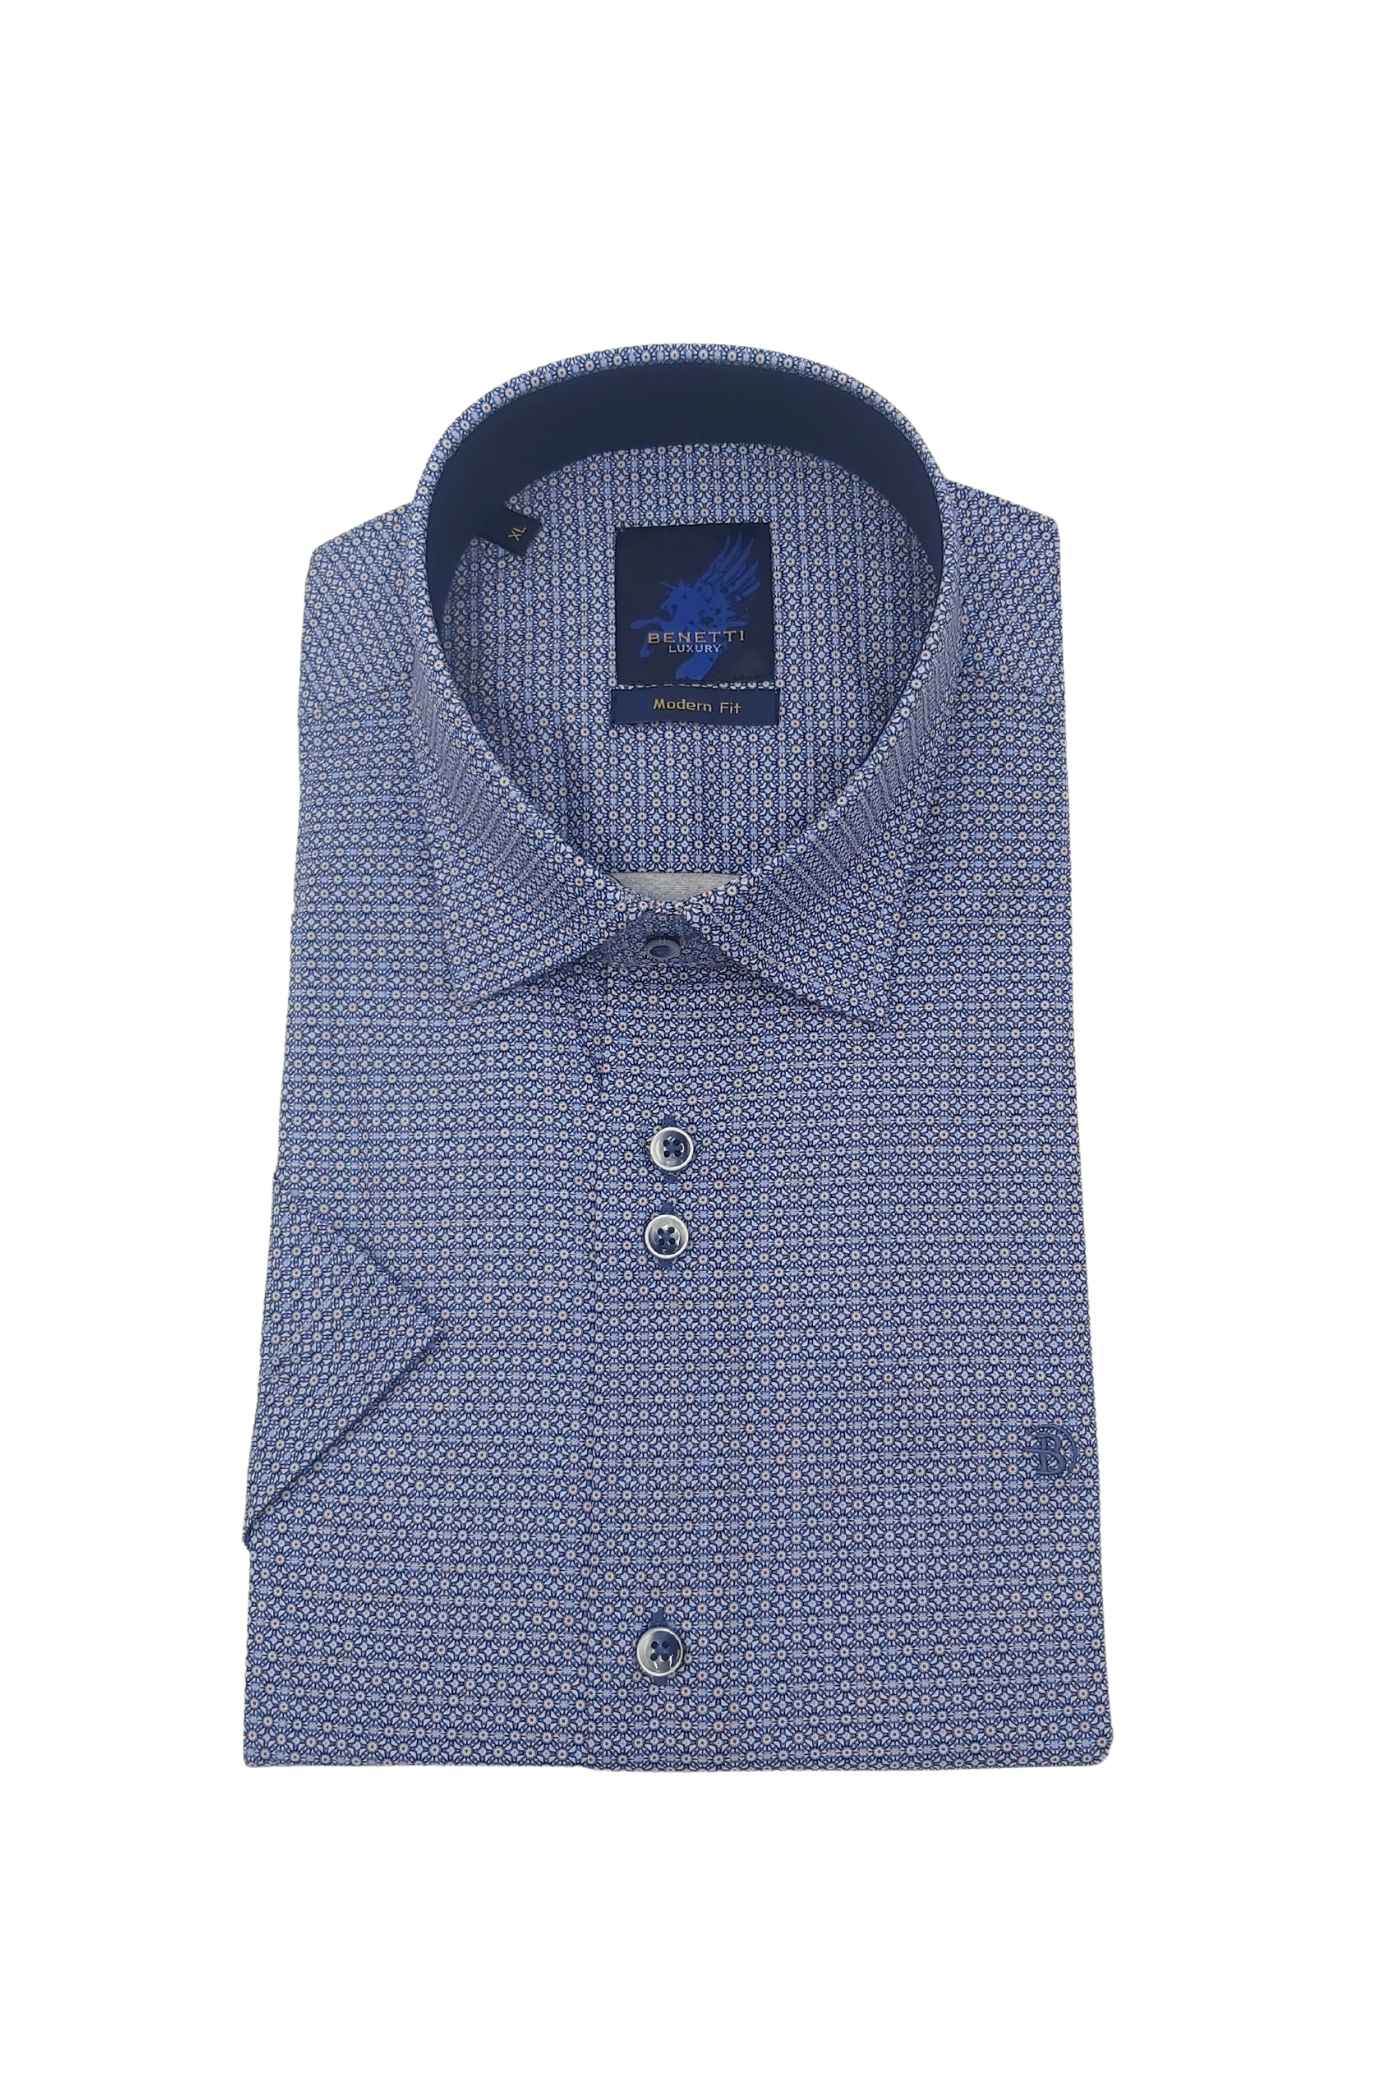 Men's Liam Short Sleeve Casual Shirt - Blue-Front View